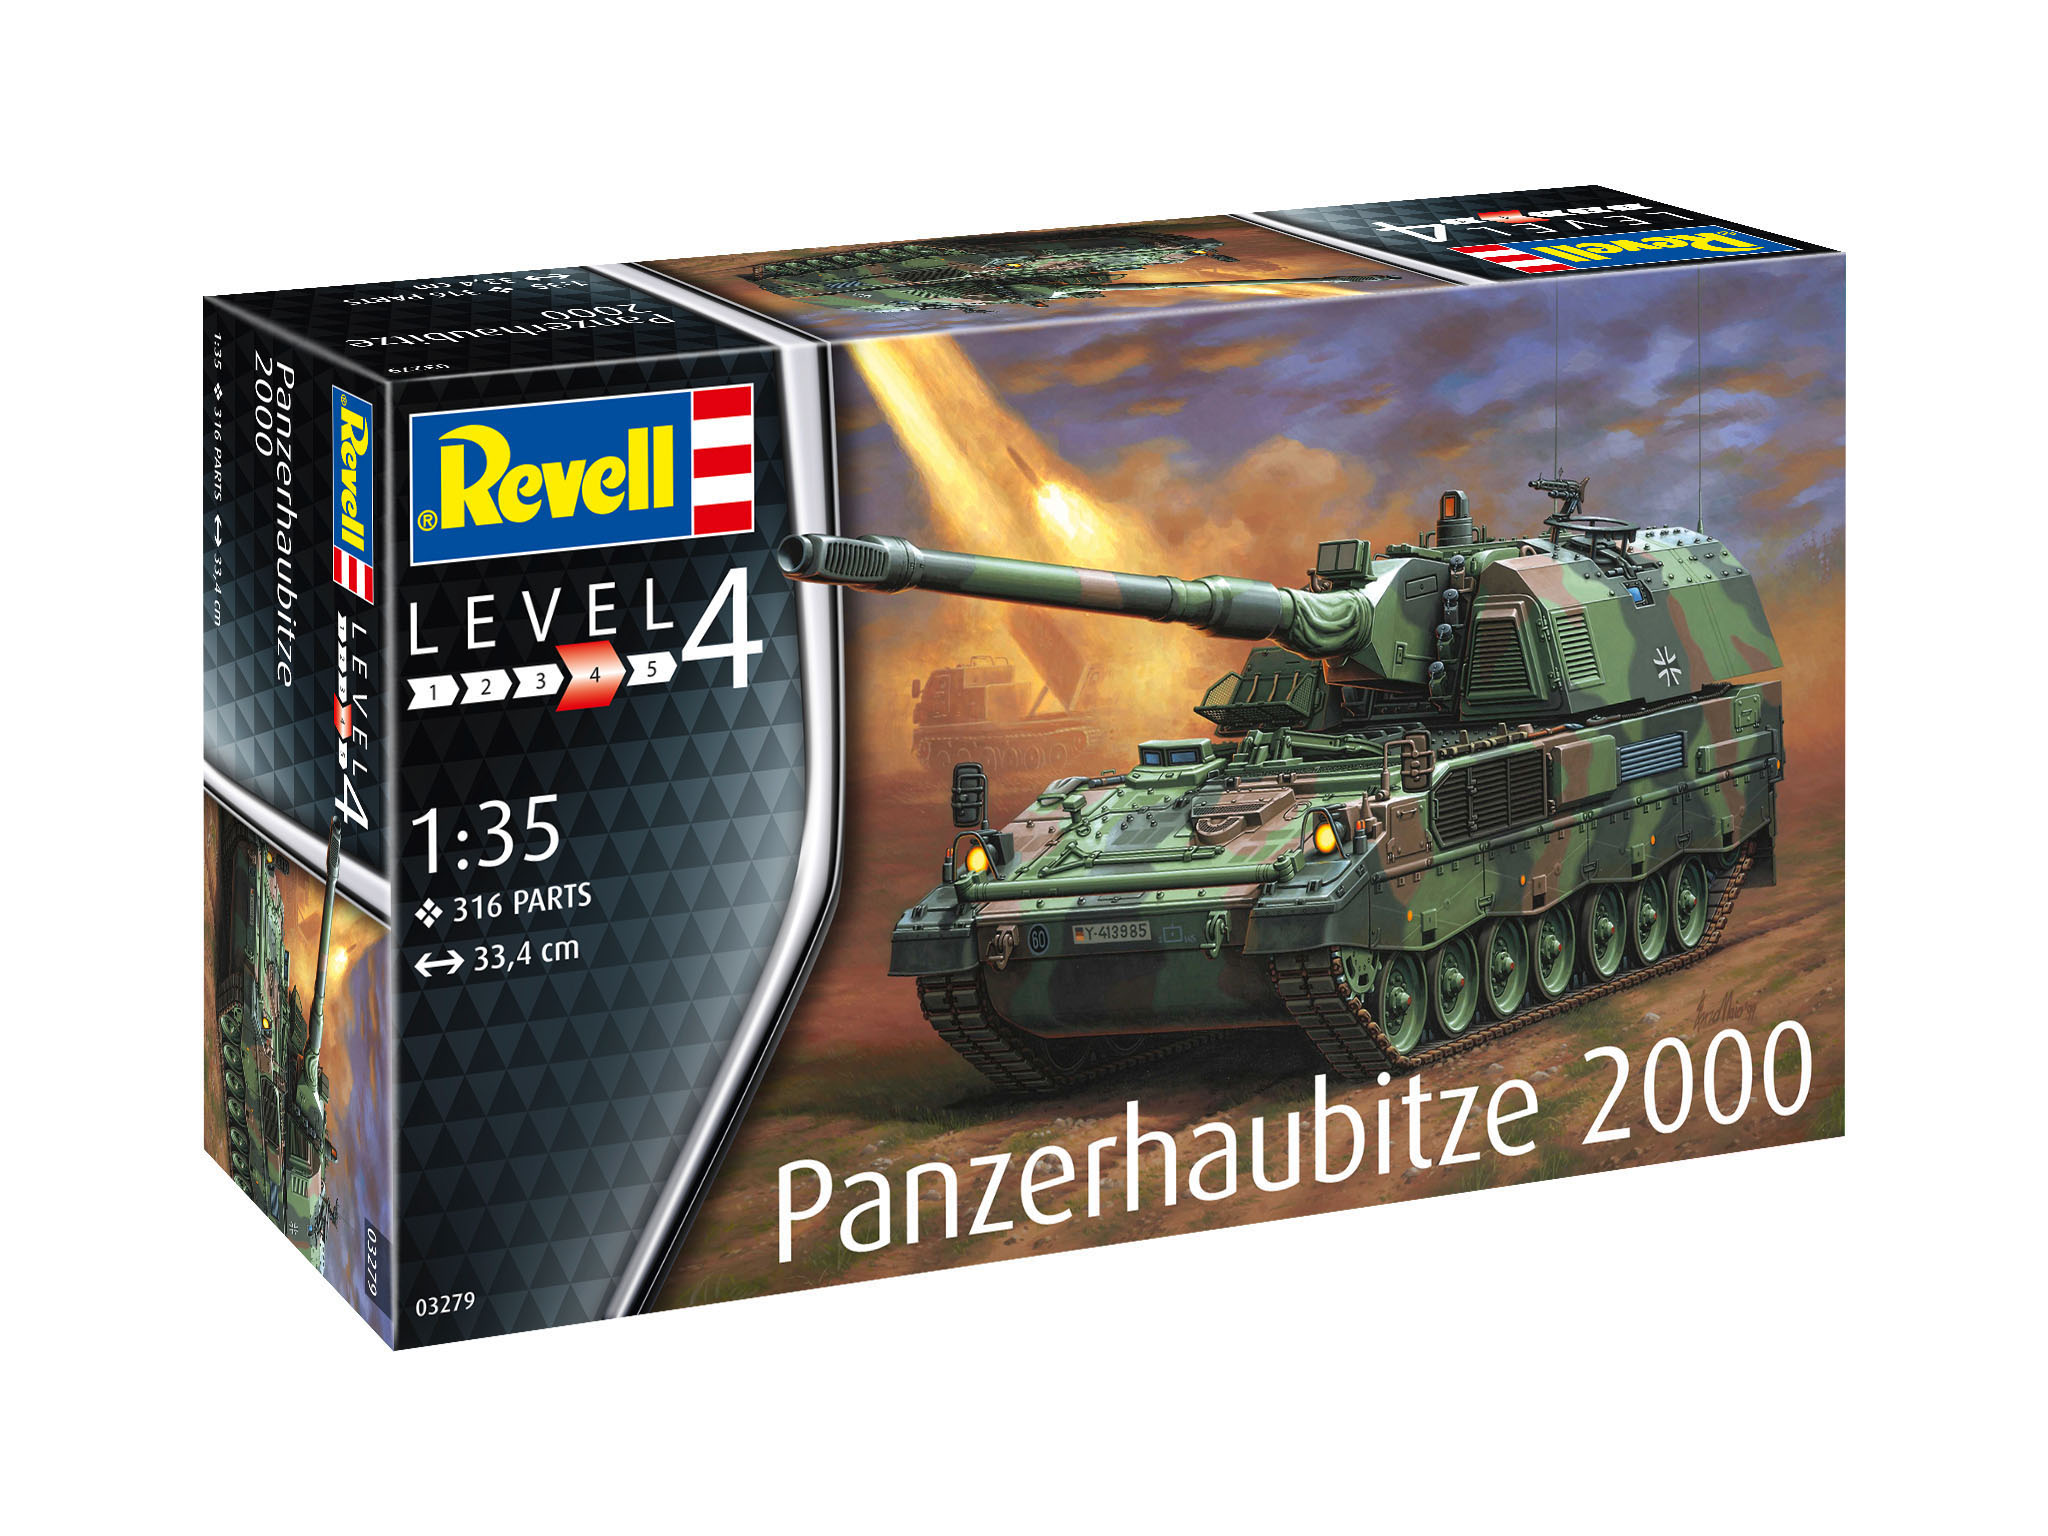 REVELL Mehrfarbig Bausatz, 2000 Panzerhaubitze